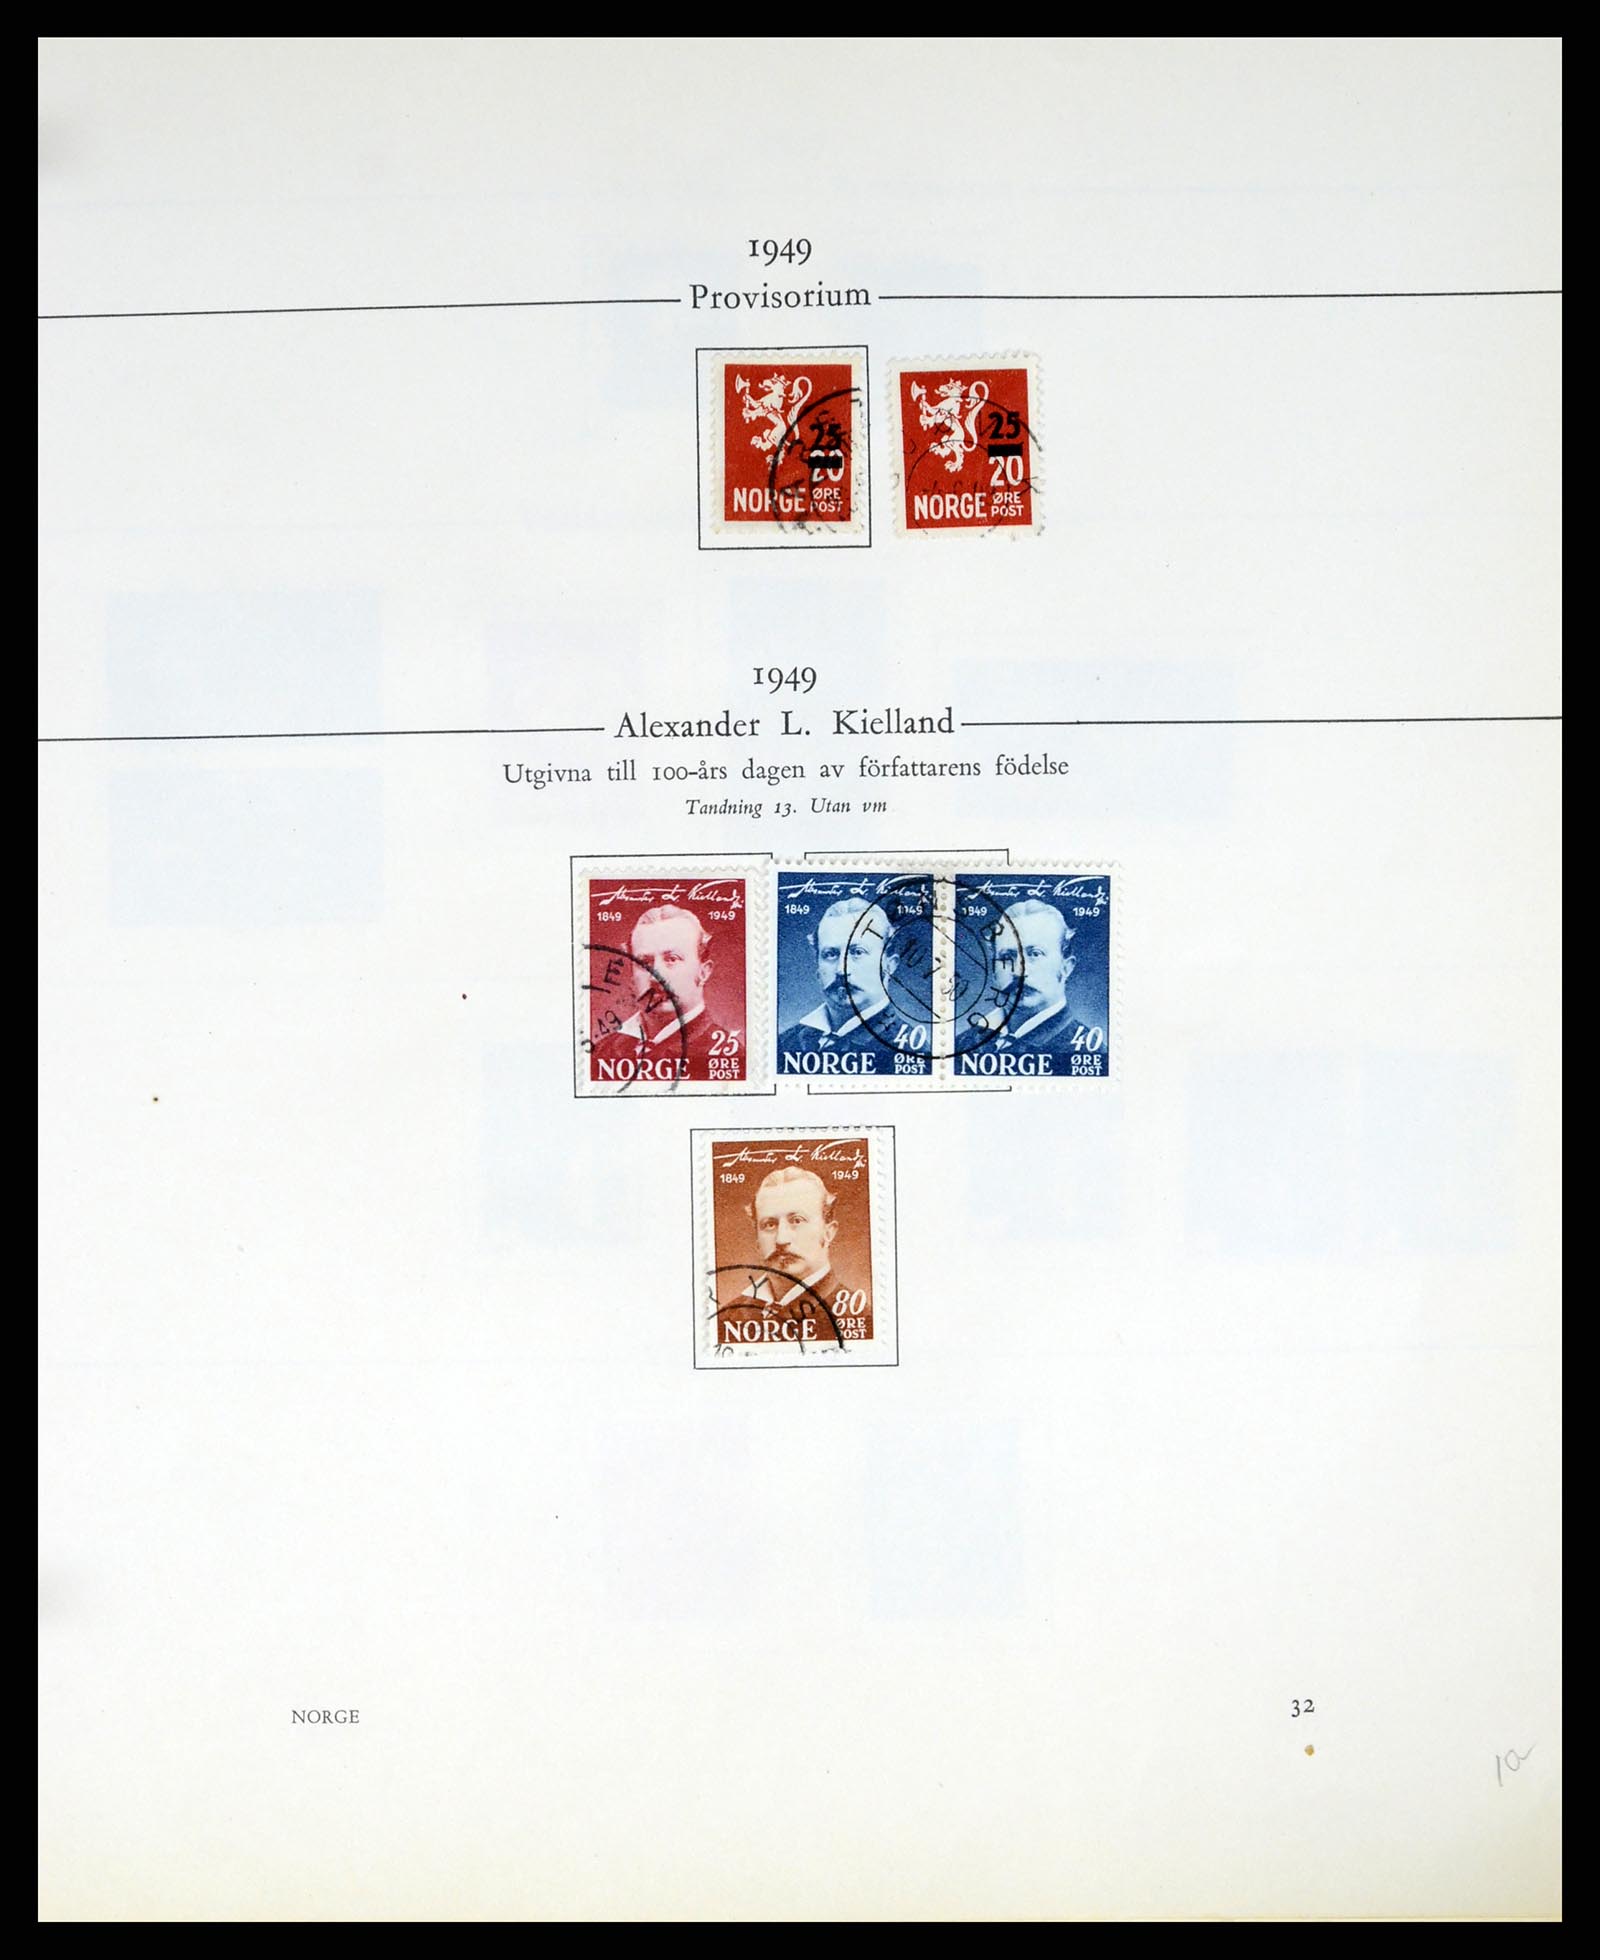 37387 033 - Stamp collection 37387 Scandinavia 1851-1960.